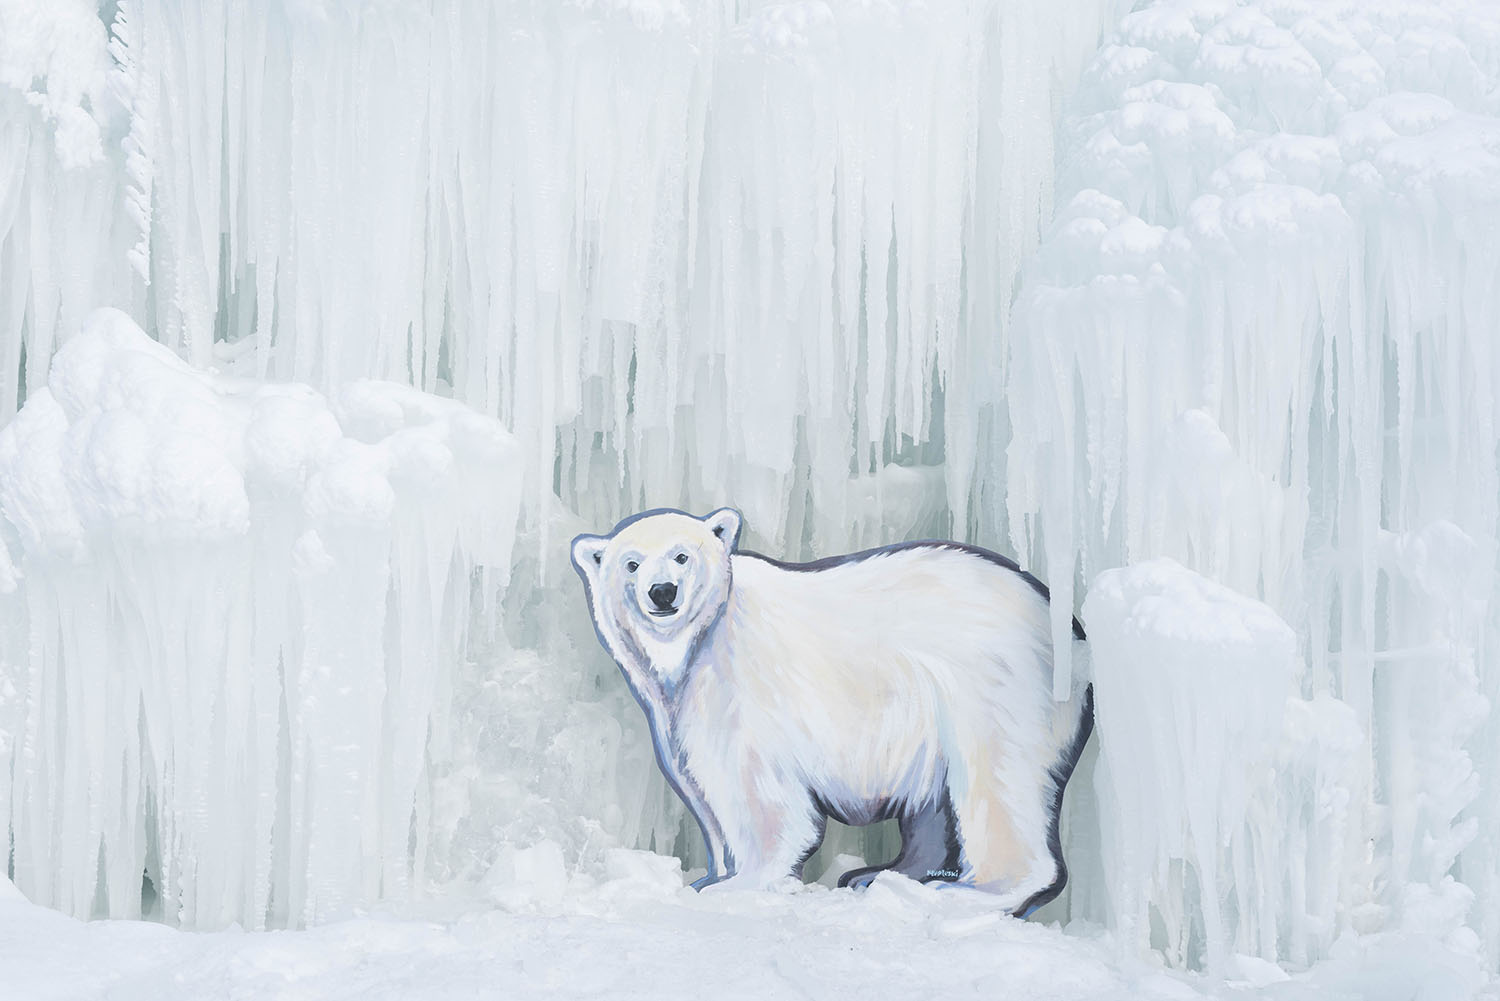 A painted polar bear by artist Kal Barteski at Ice Castles at The Forks in Winnipeg, as captured by Winnipeg travel blog Cee Fardoe of Coco & Vera